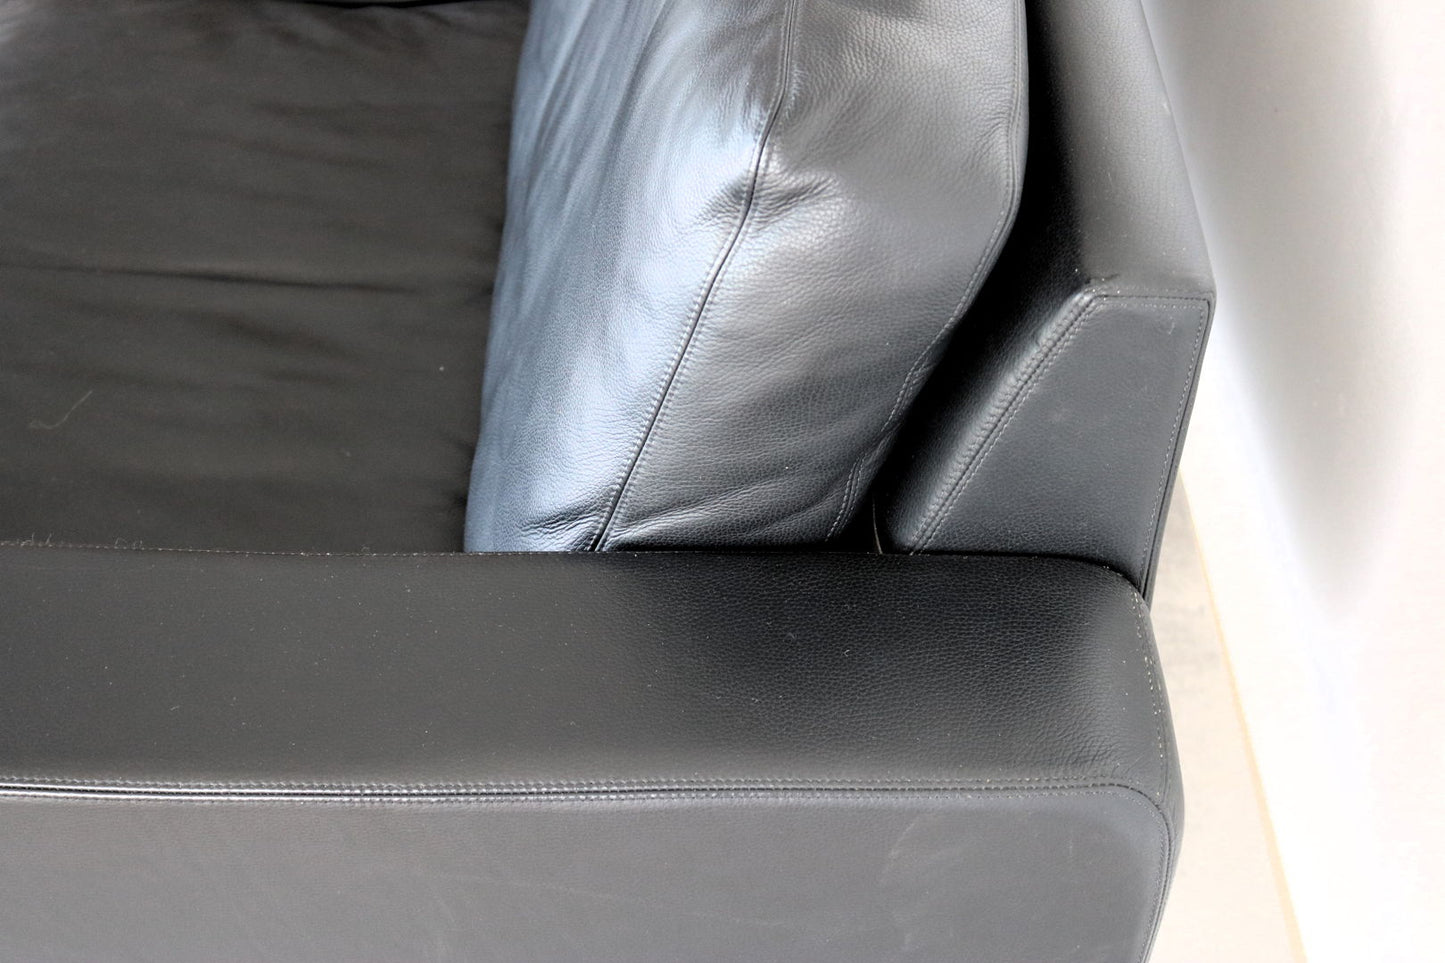 vintage sofa | design sofa | Gispen | AD-B3